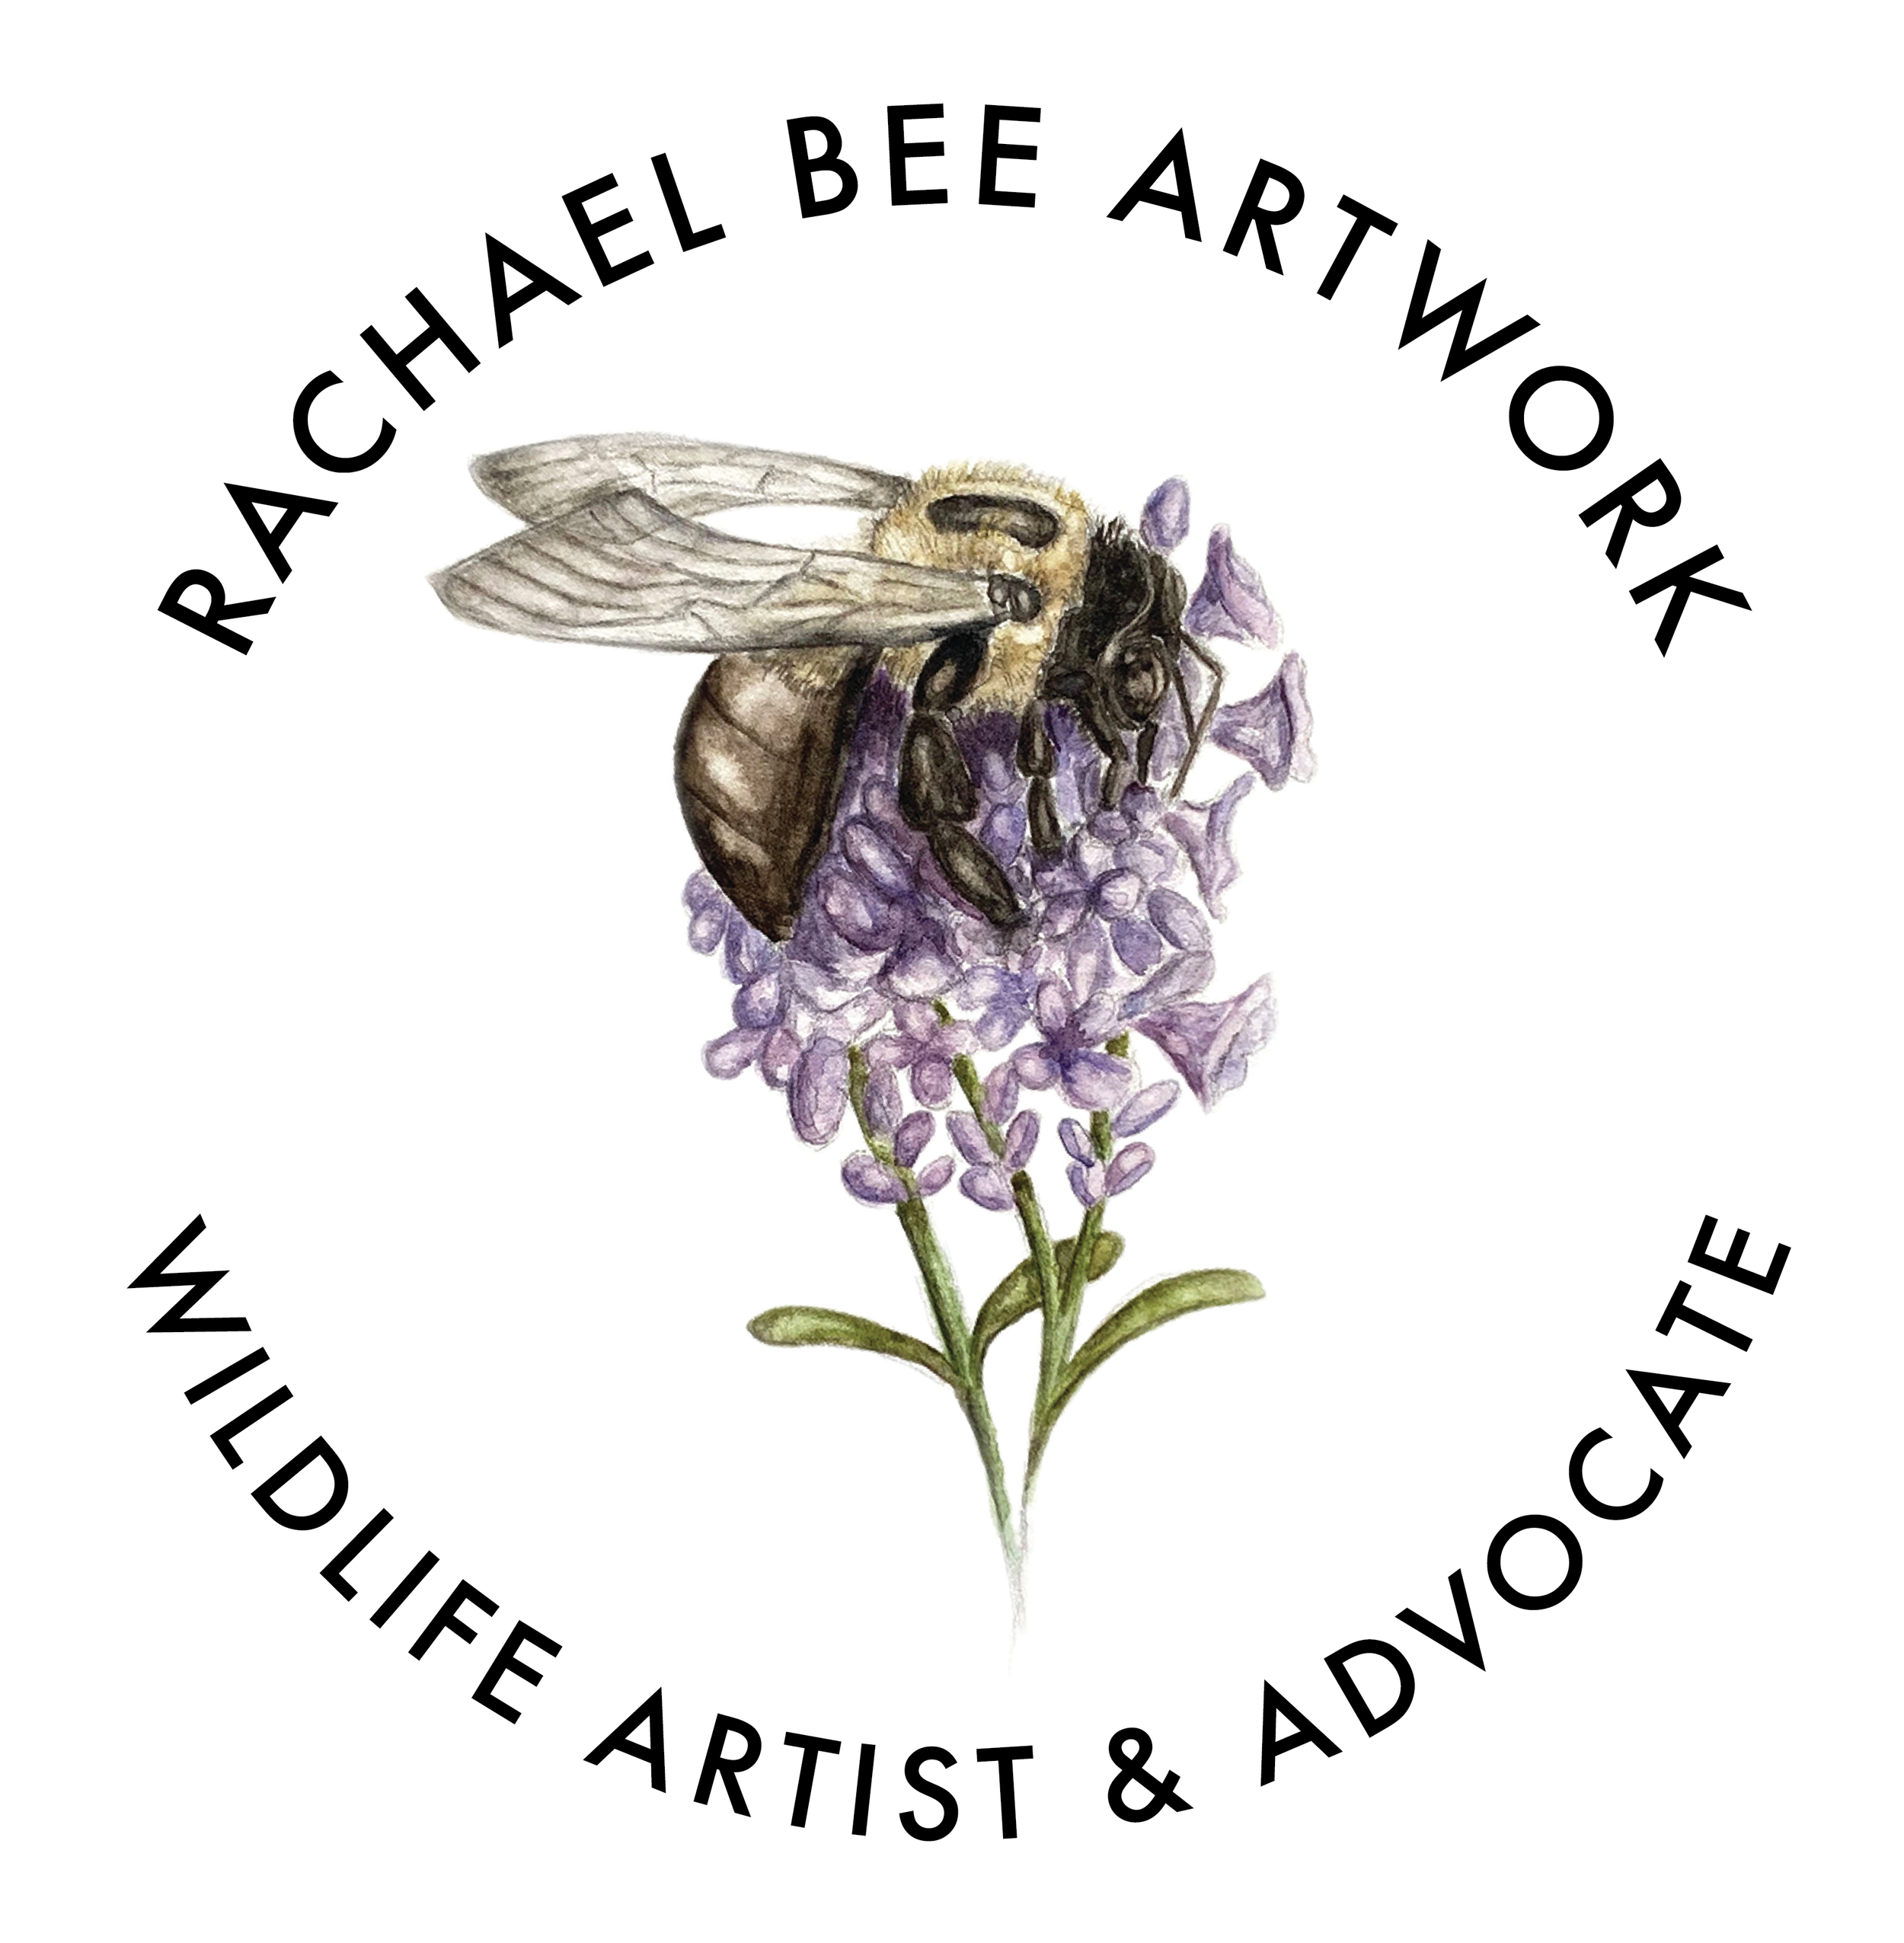 Rachael Bee Art Work